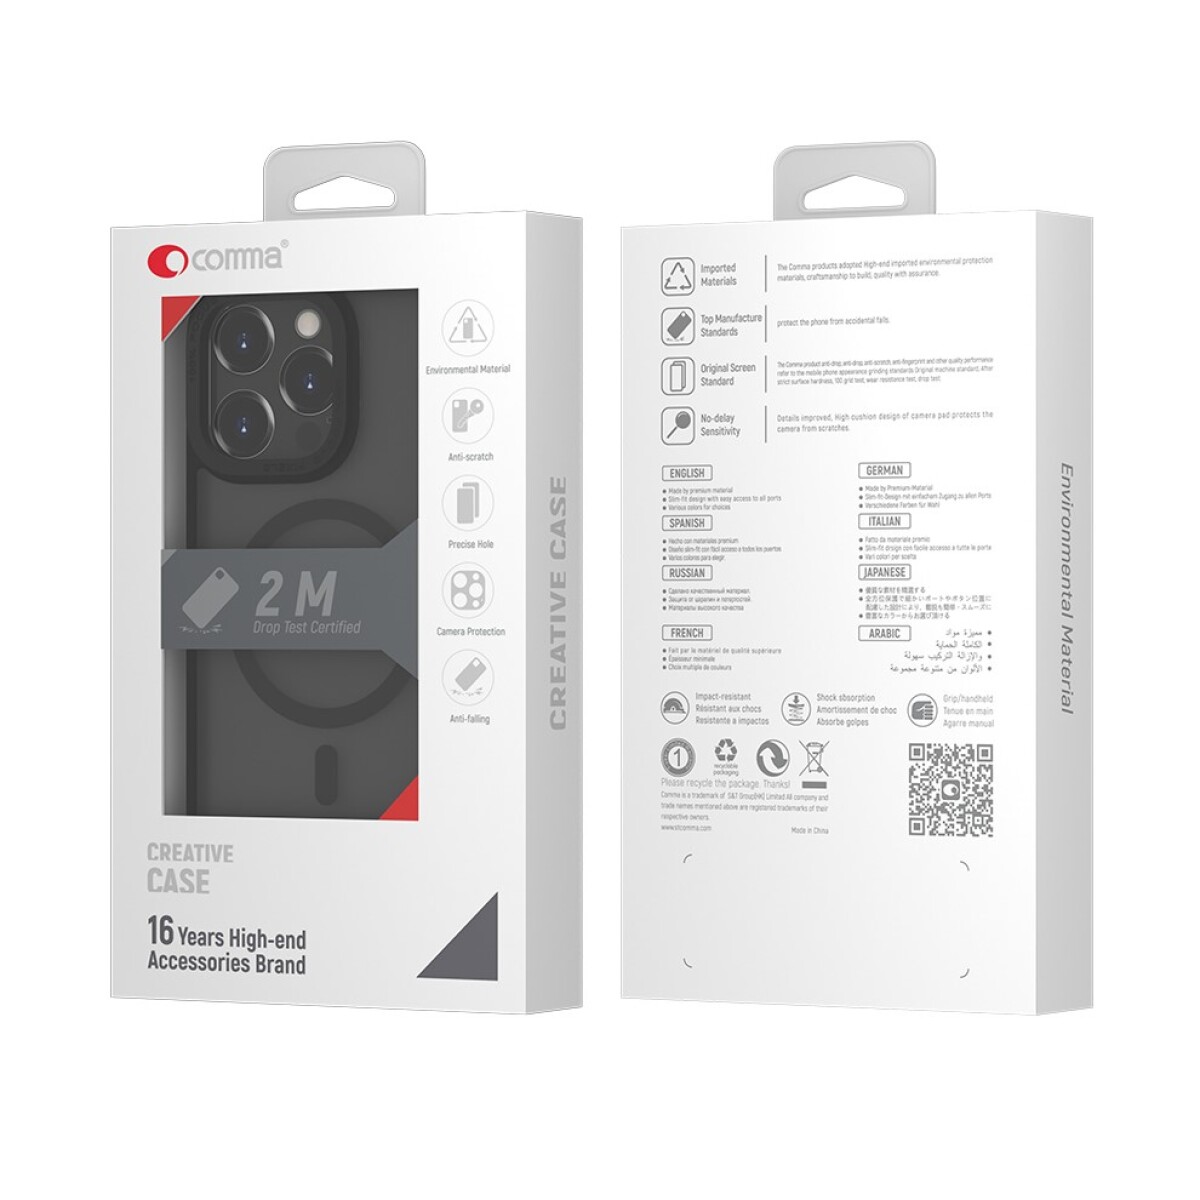 Protector case anti-shock magnética iphone 14 pro max devia metálico Purple